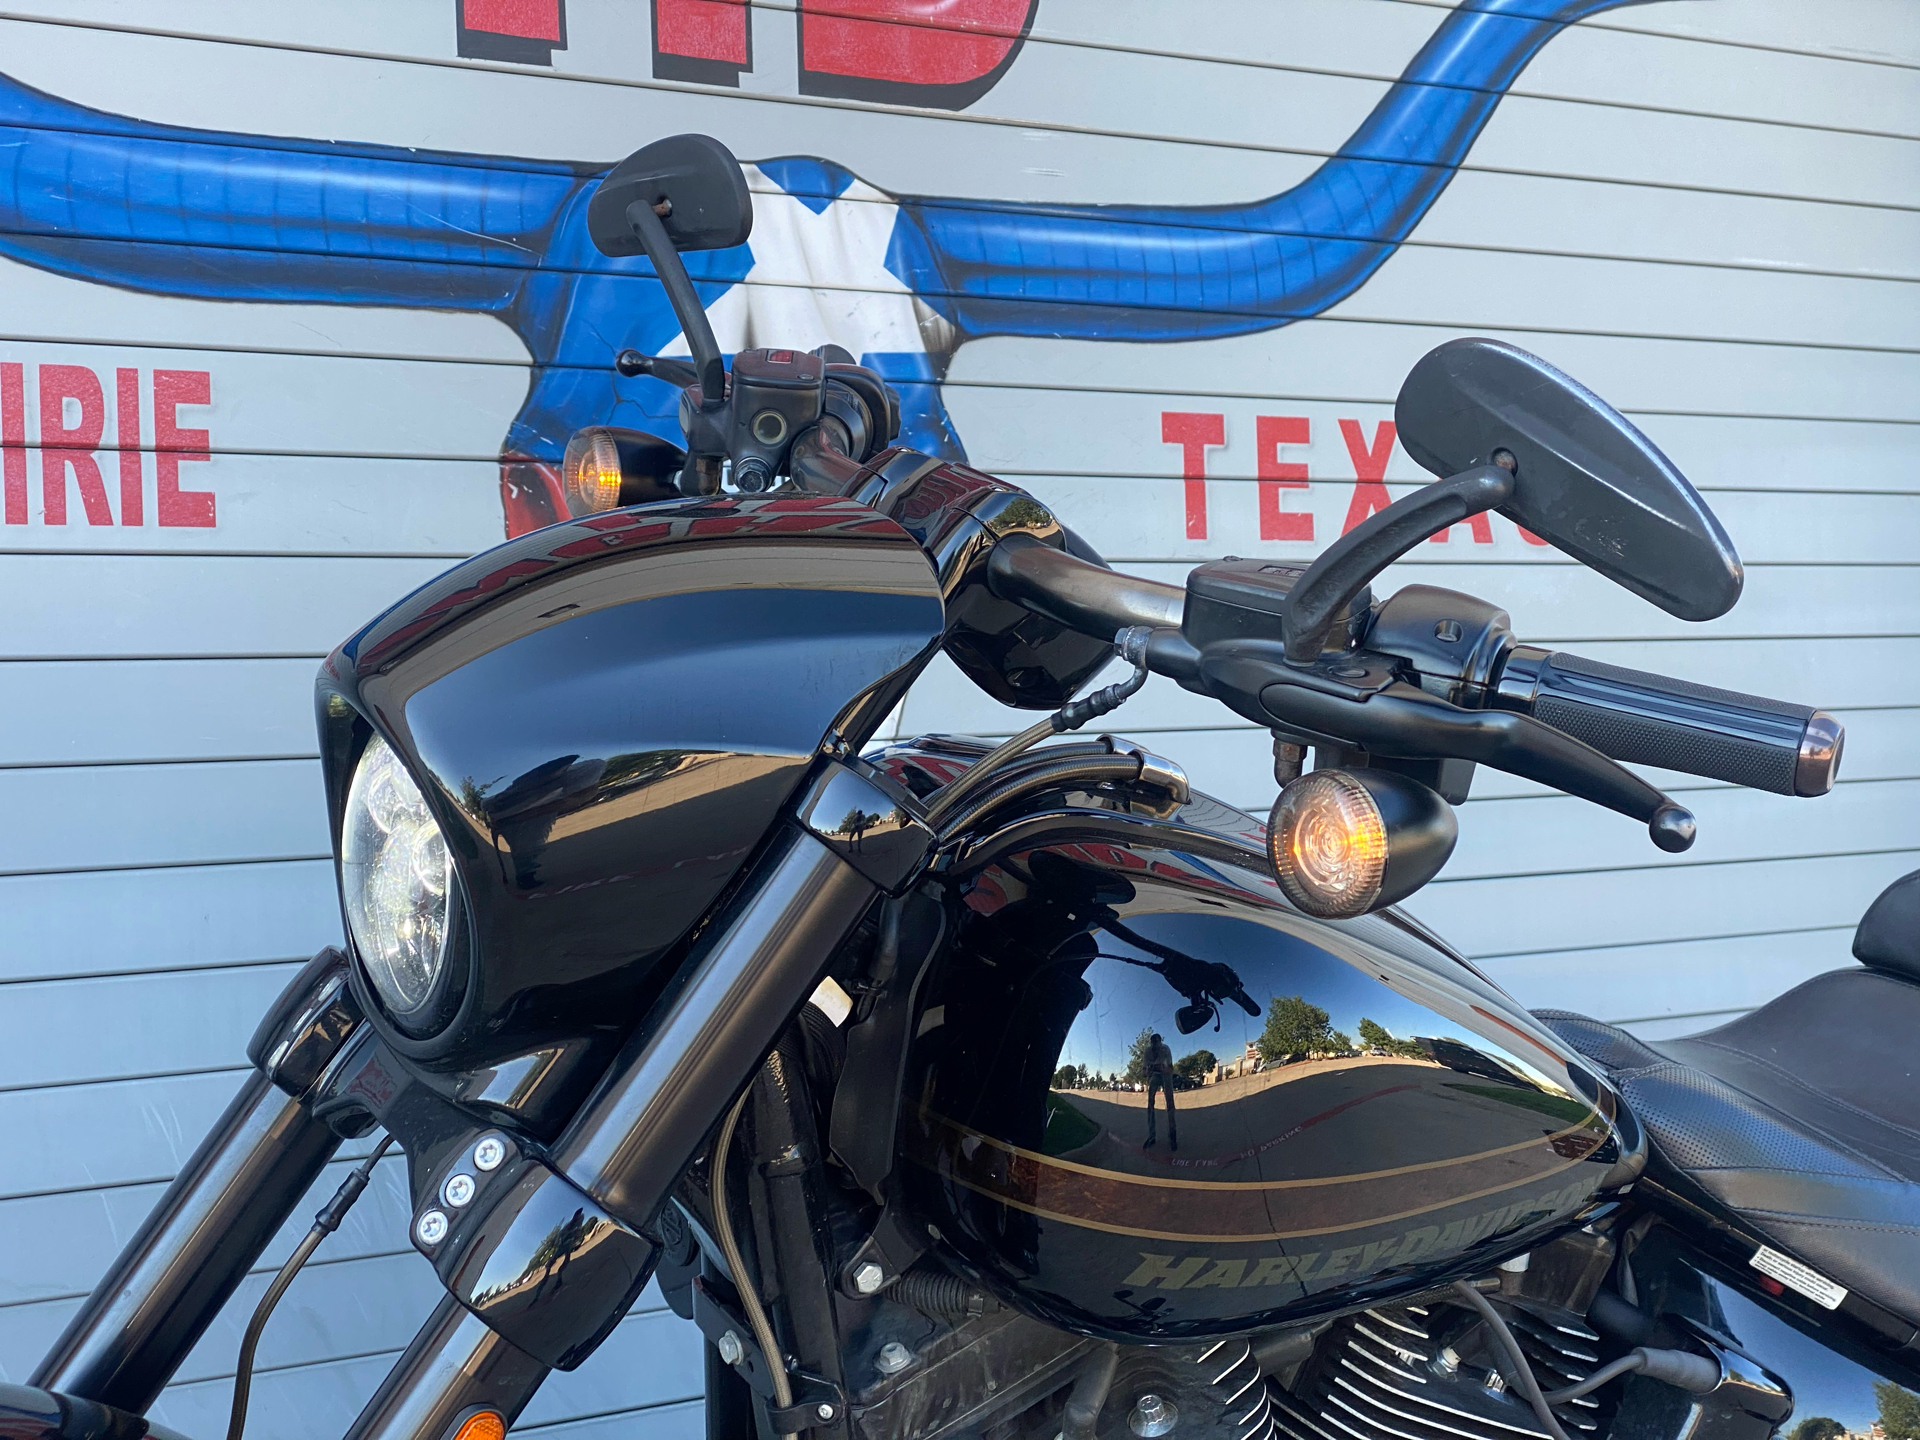 2017 Harley-Davidson CVO™ Pro Street Breakout® in Grand Prairie, Texas - Photo 13